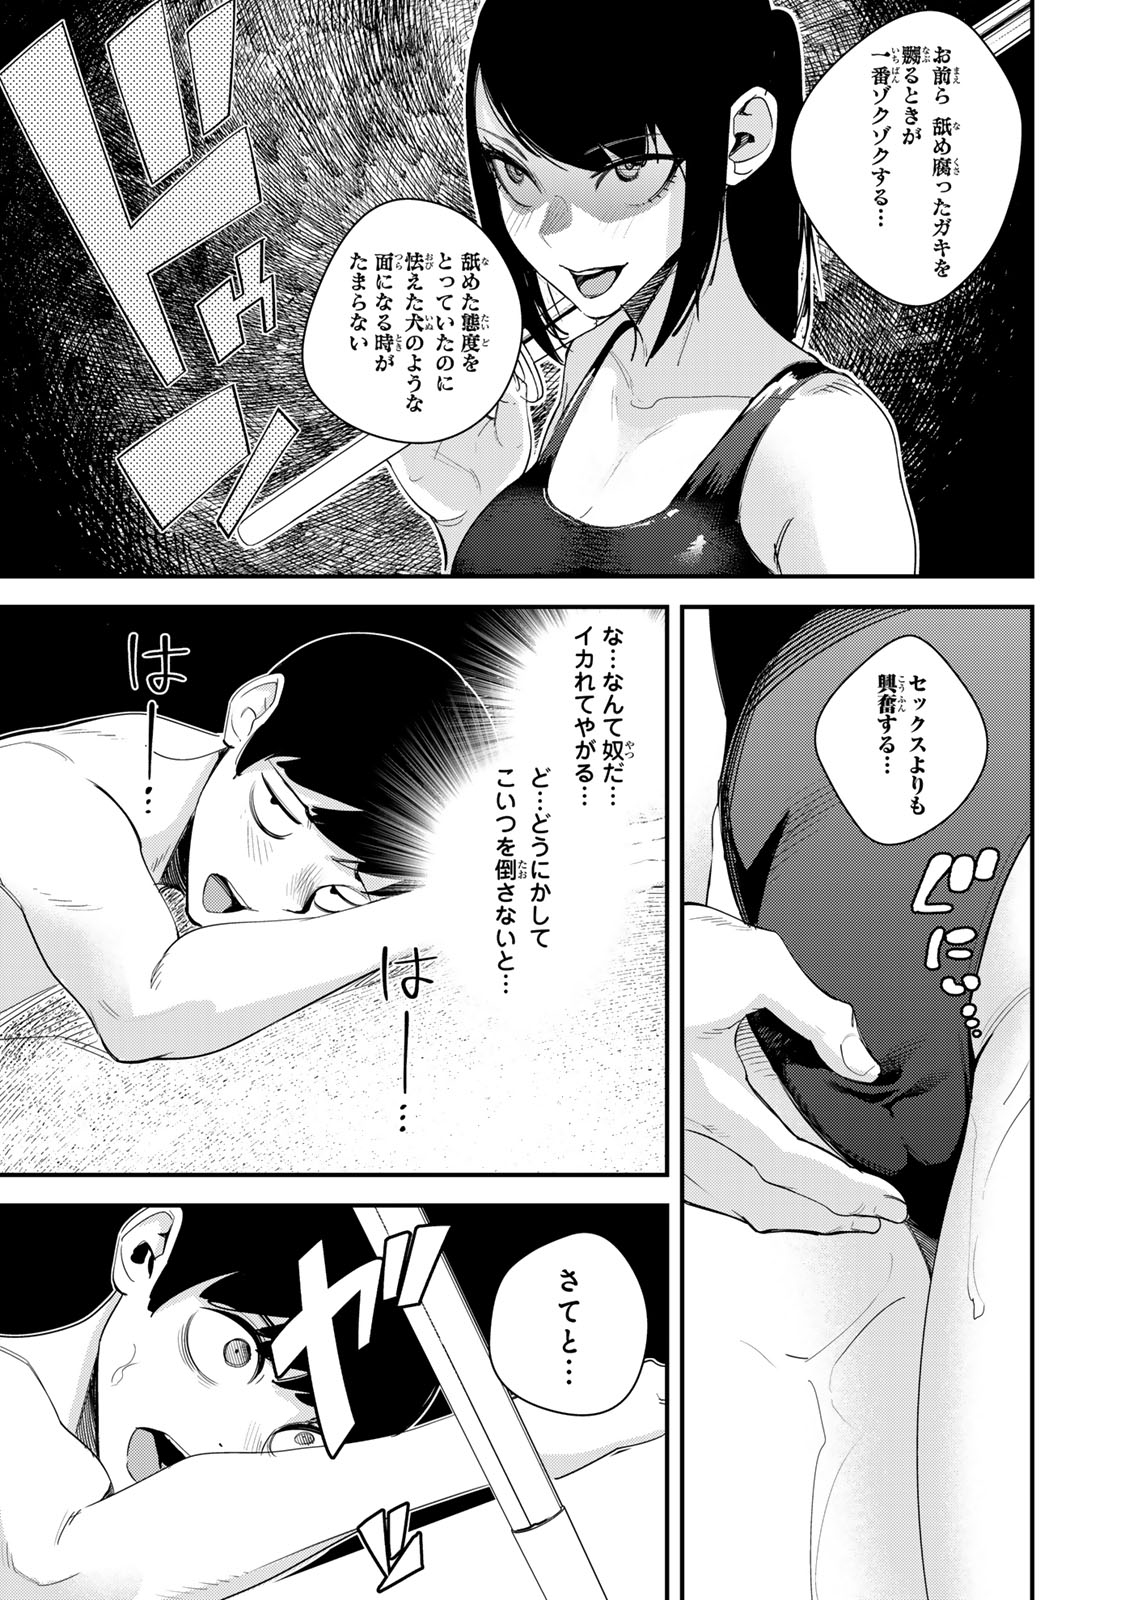 Seima Toubatsu Deneidan - Chapter 2 - Page 15